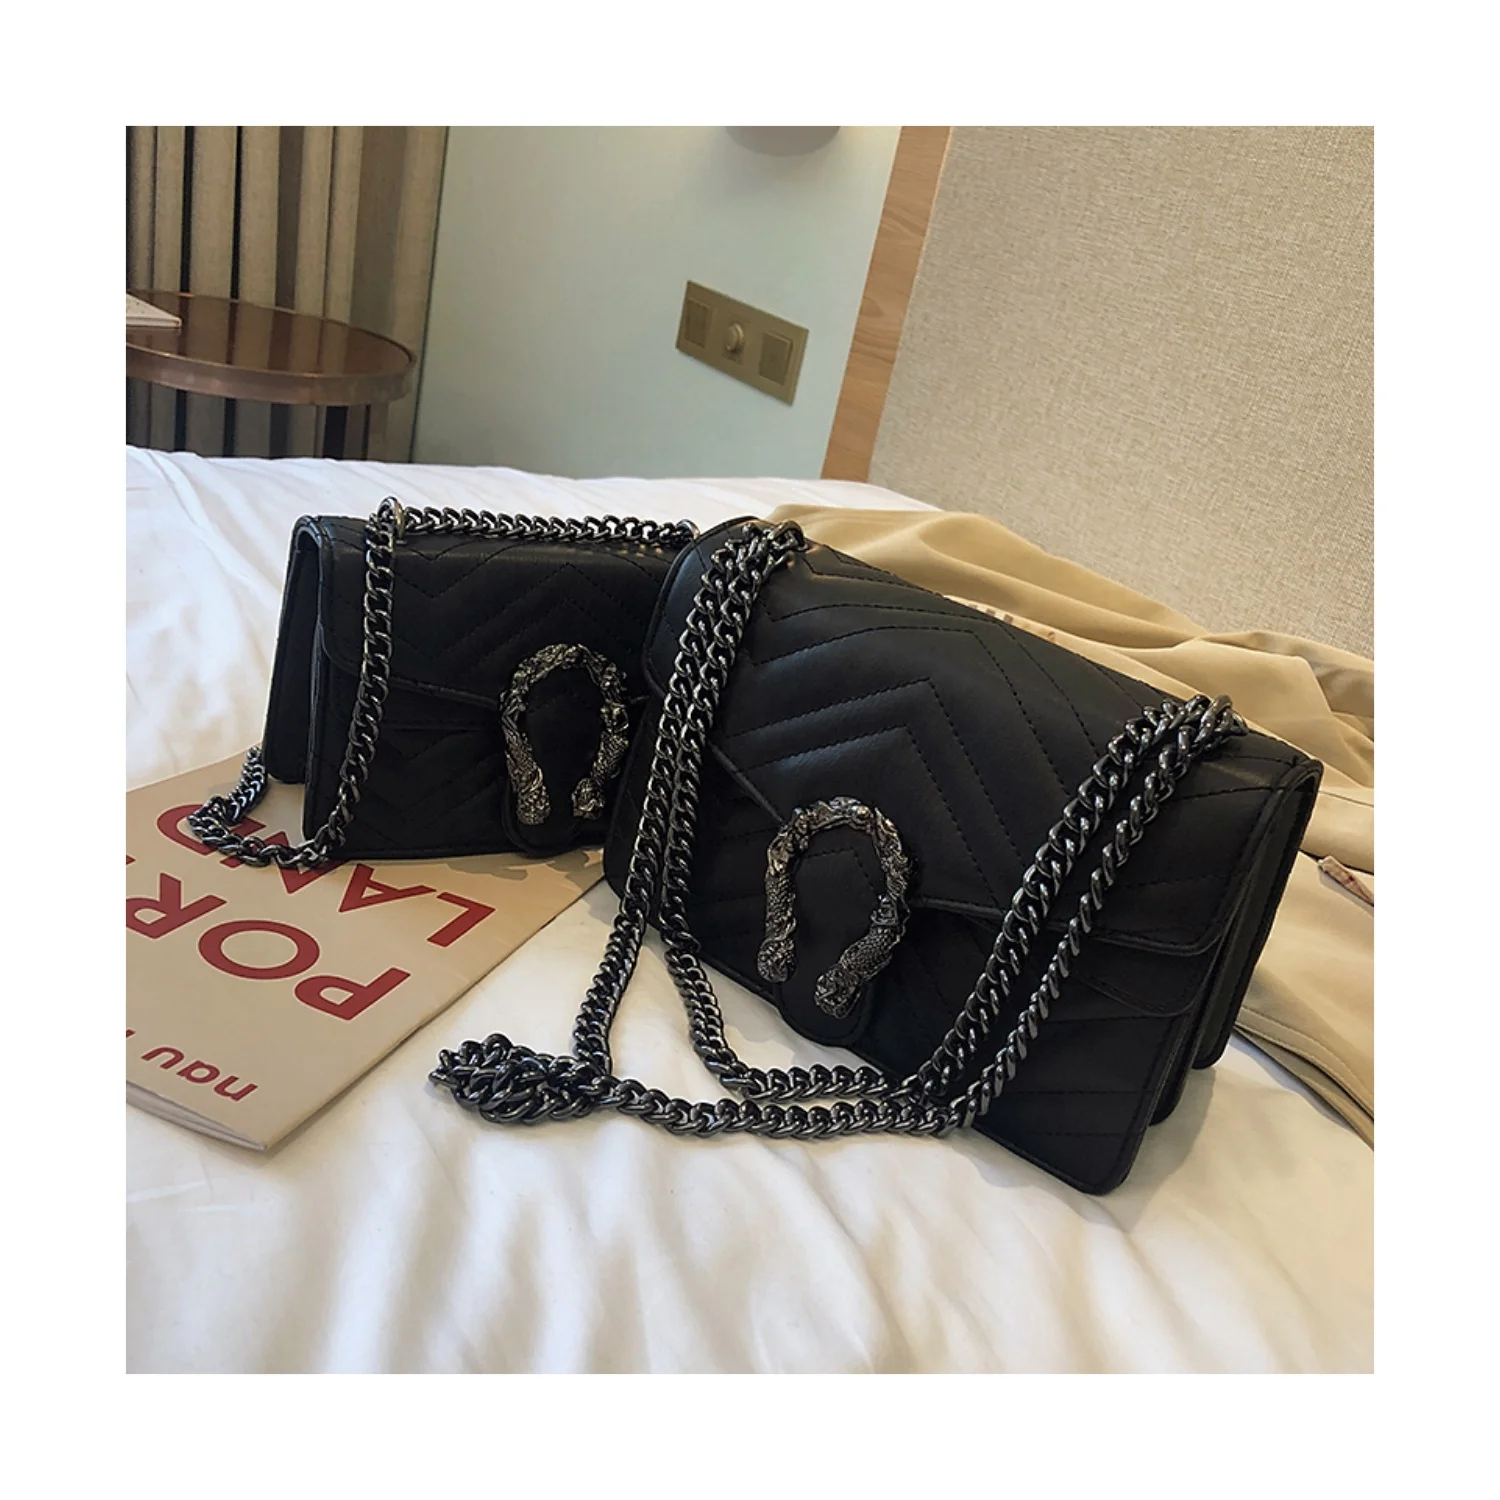 

Hot luxury ladies elegance chain sac pure color square bag designer fashion wave pattern hand bags women purses sling handbags